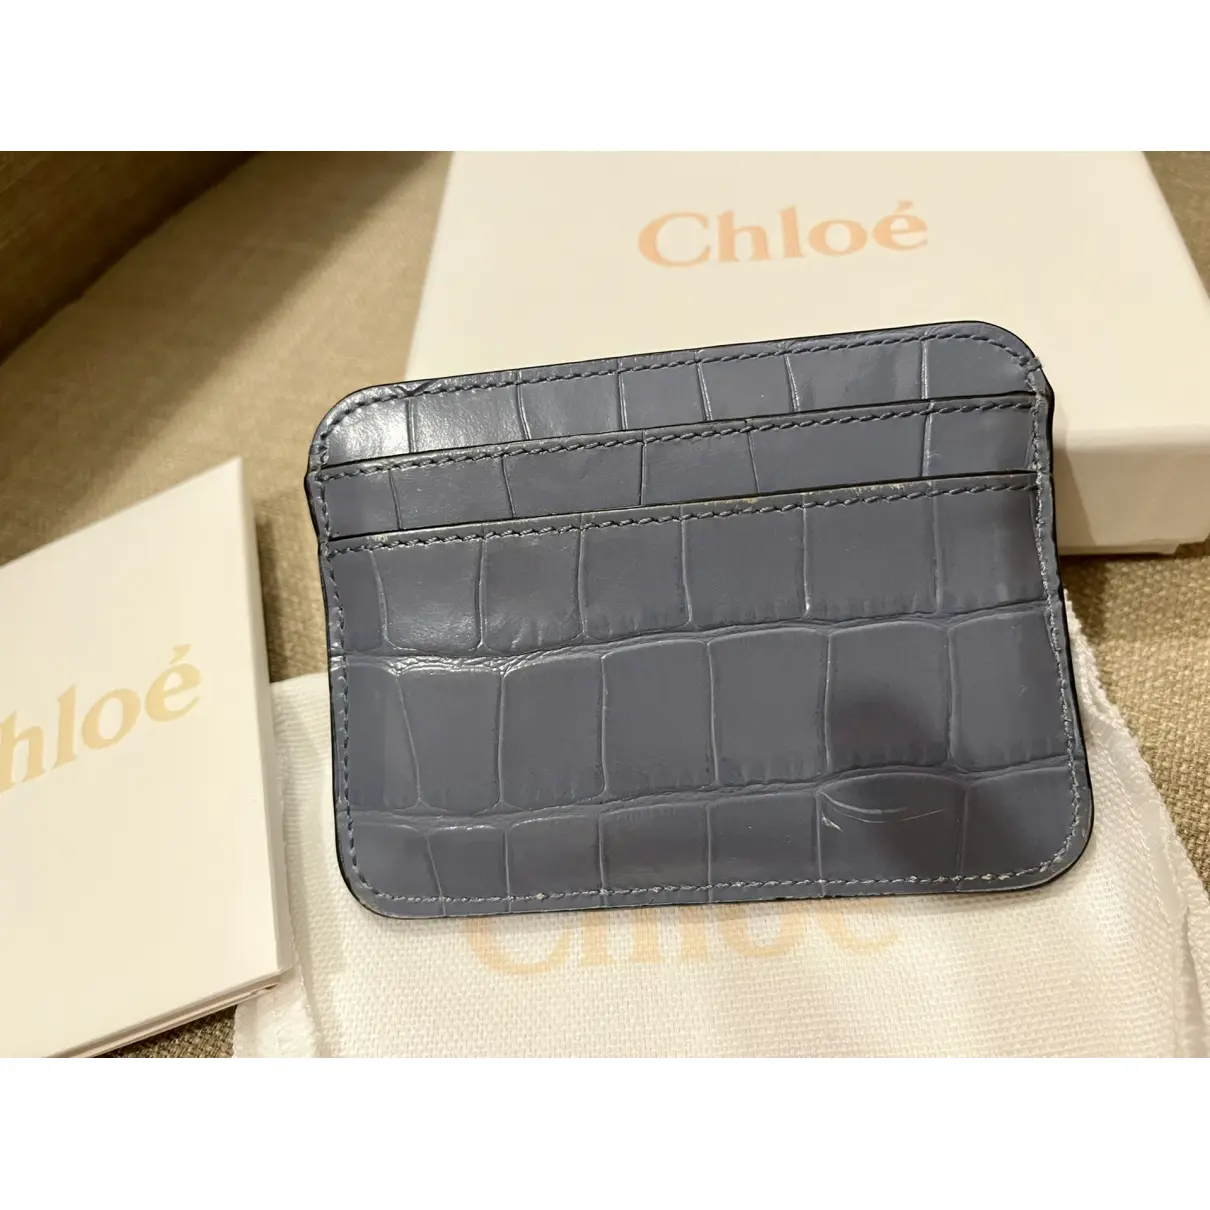 C leather wallet Chloé